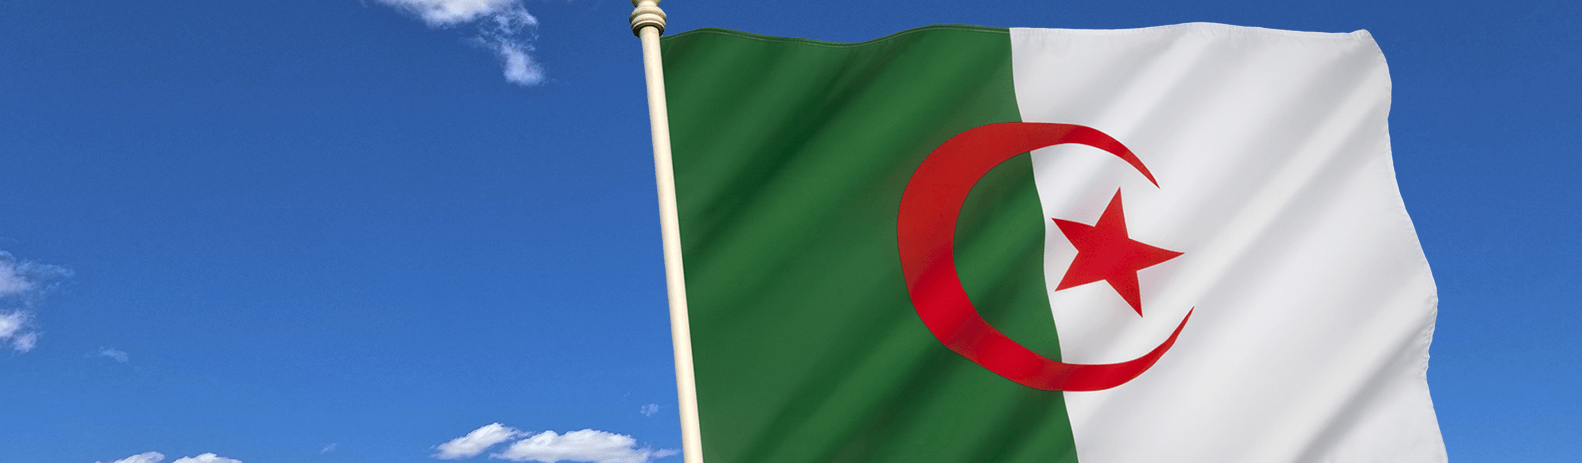 Algerian flag on the background of the blue sky